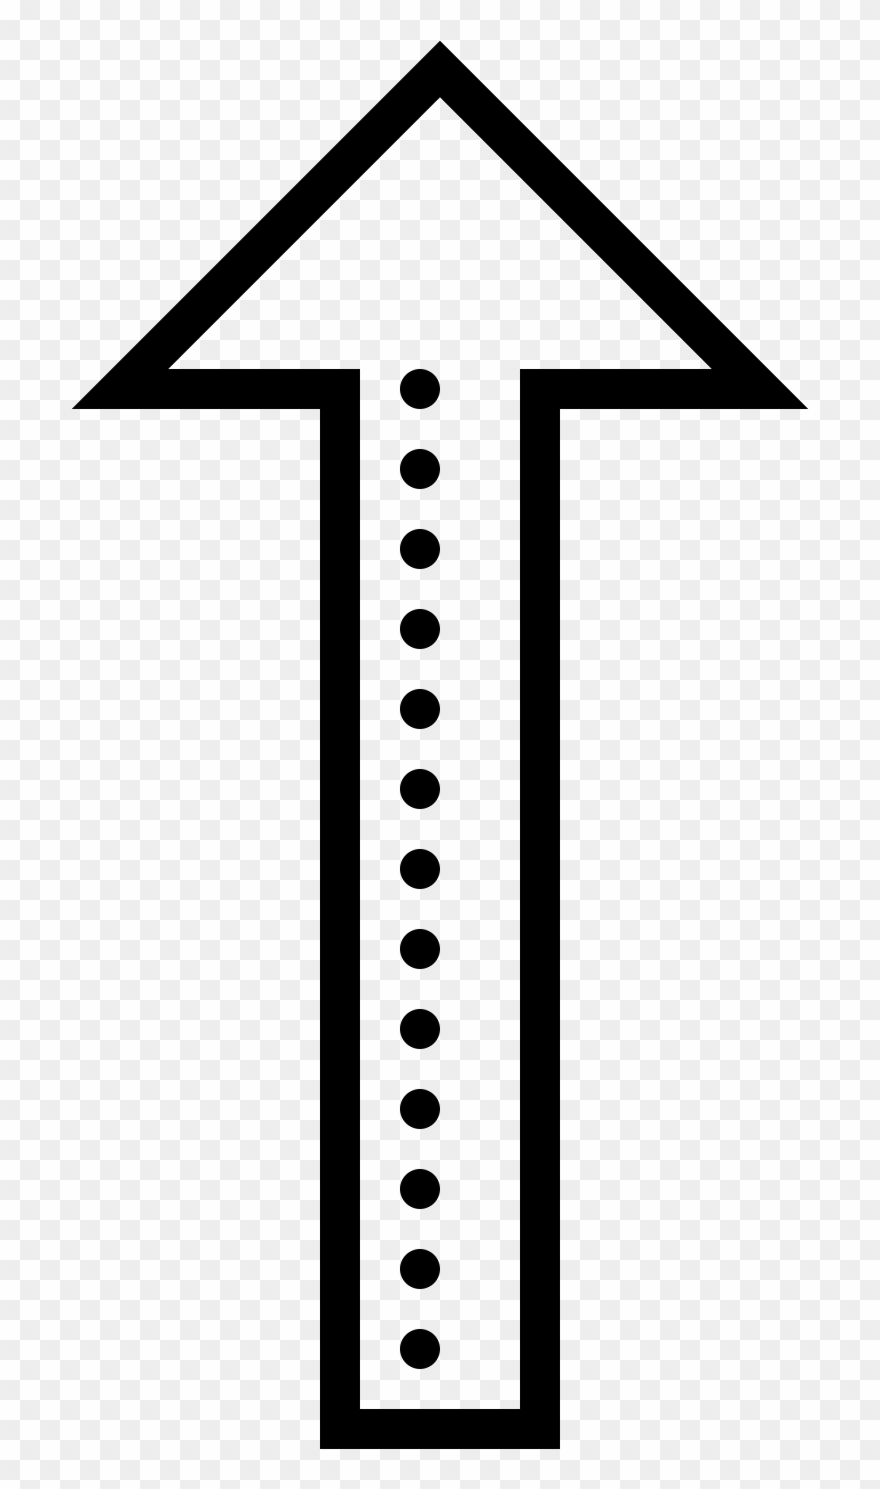 Long arrow icon.